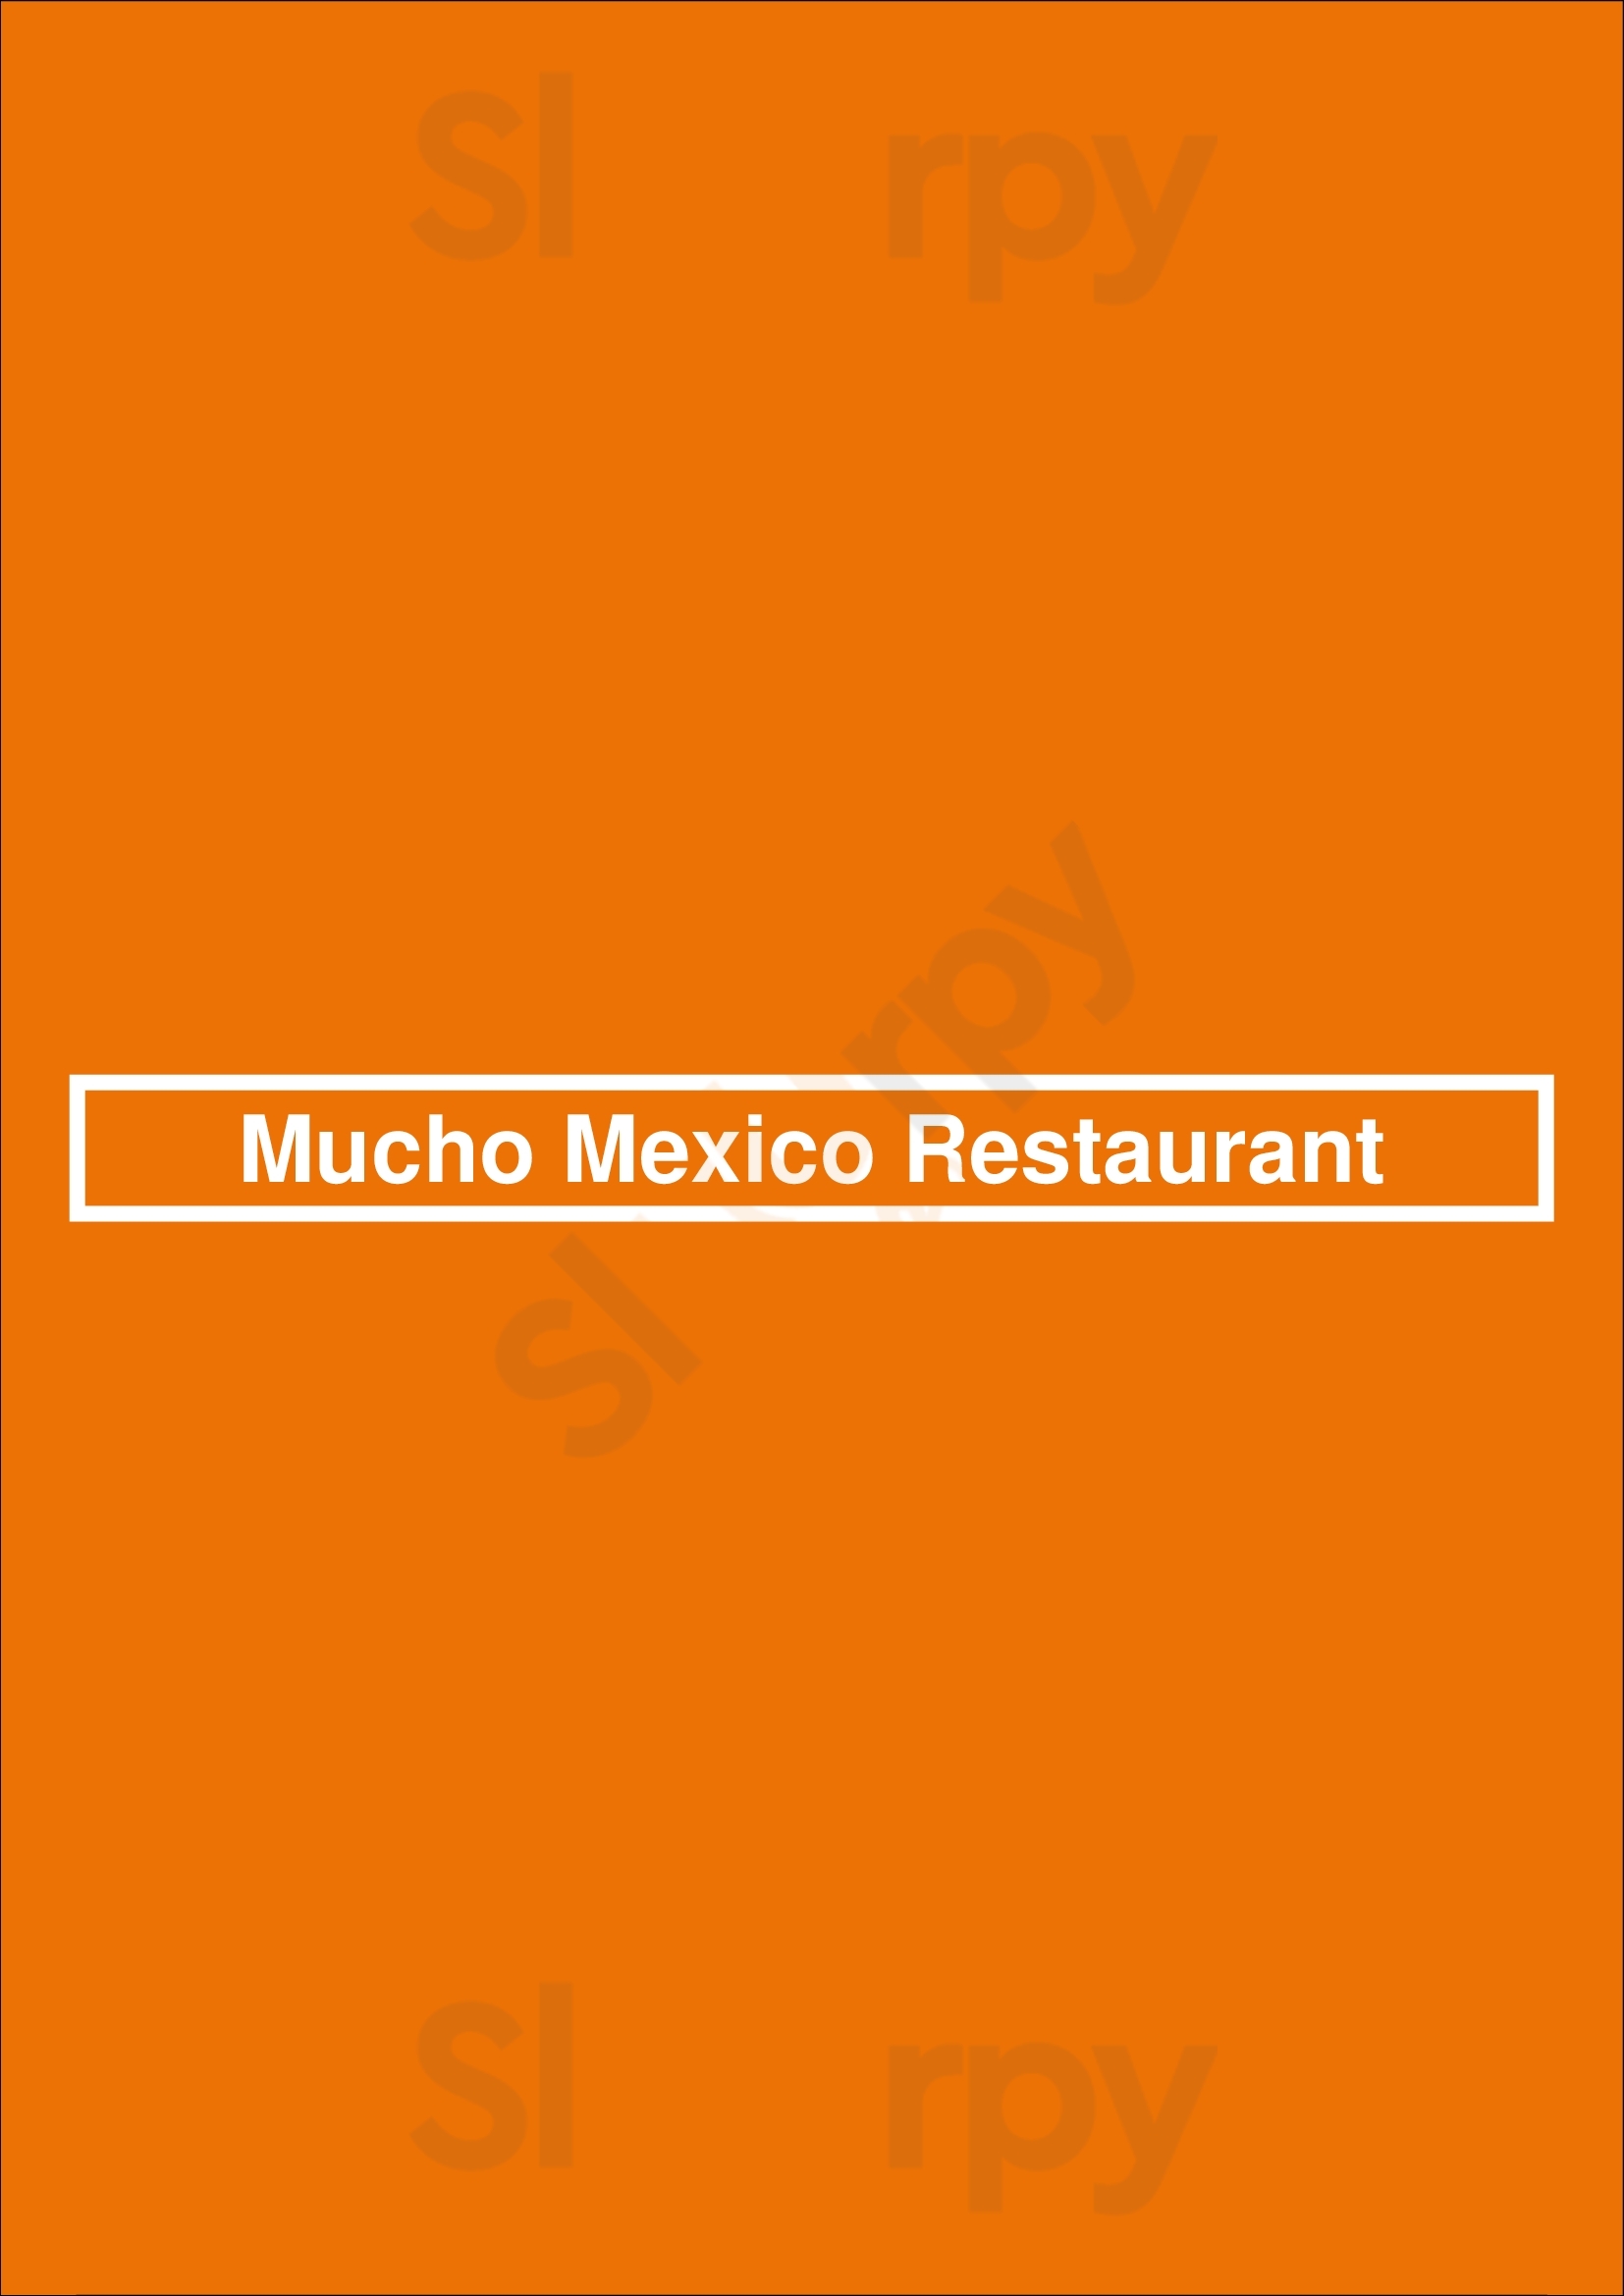 Mucho Mexico Restaurant Houston Menu - 1